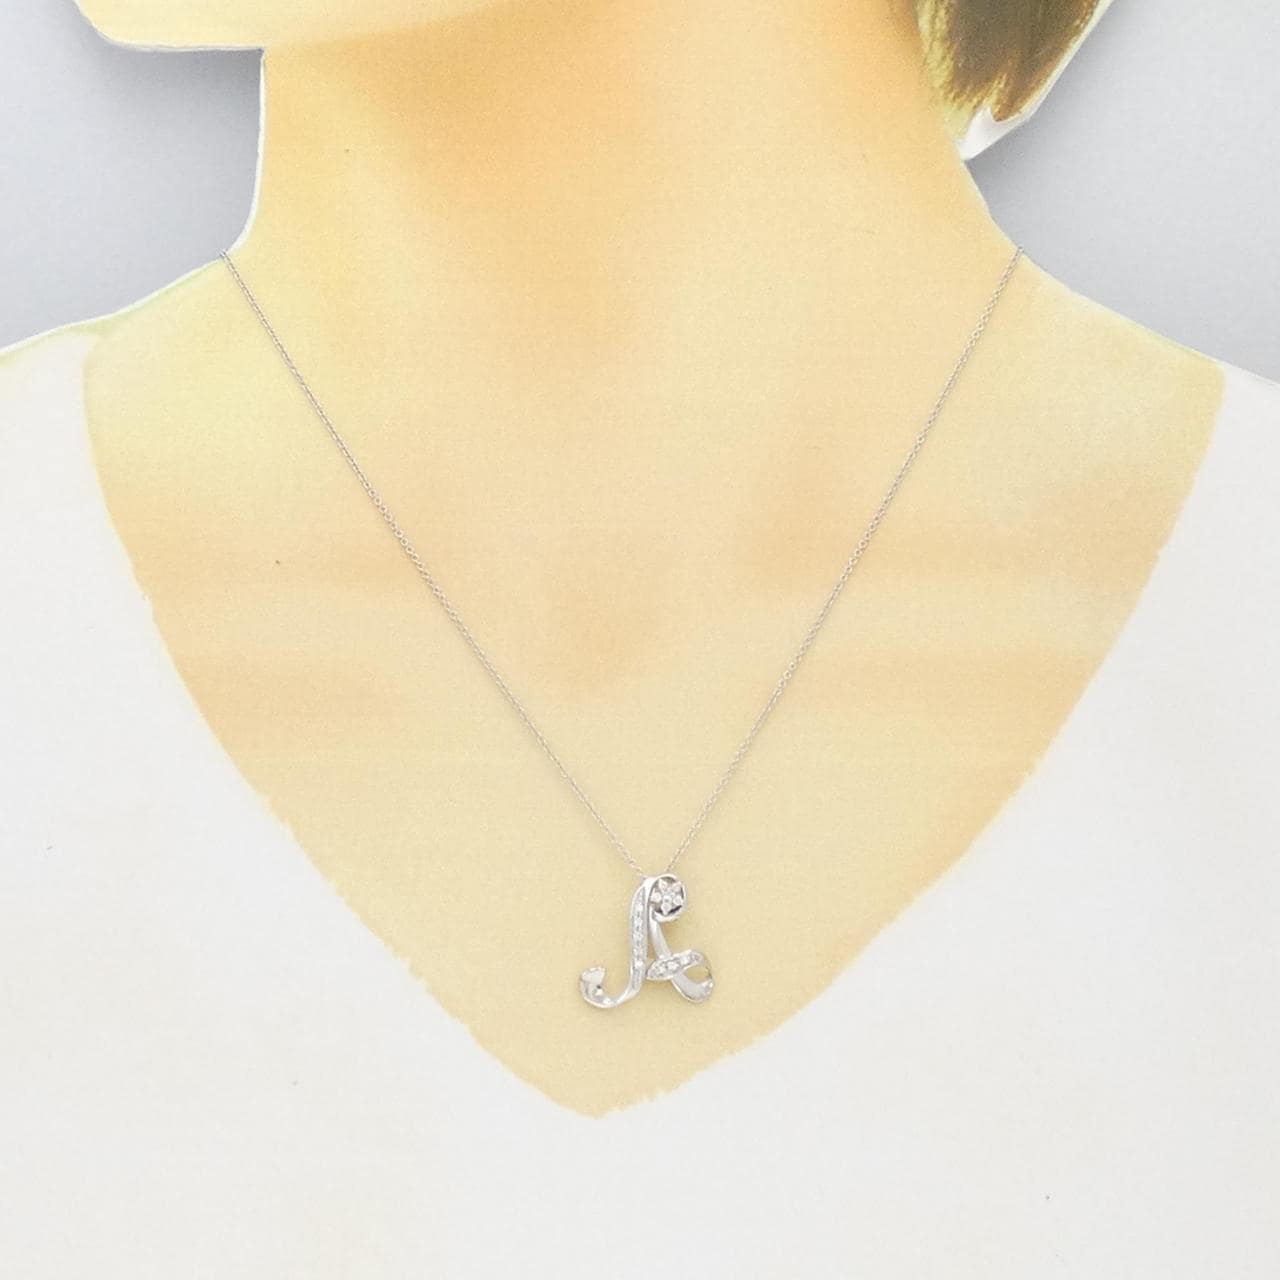 750WG flower Diamond necklace